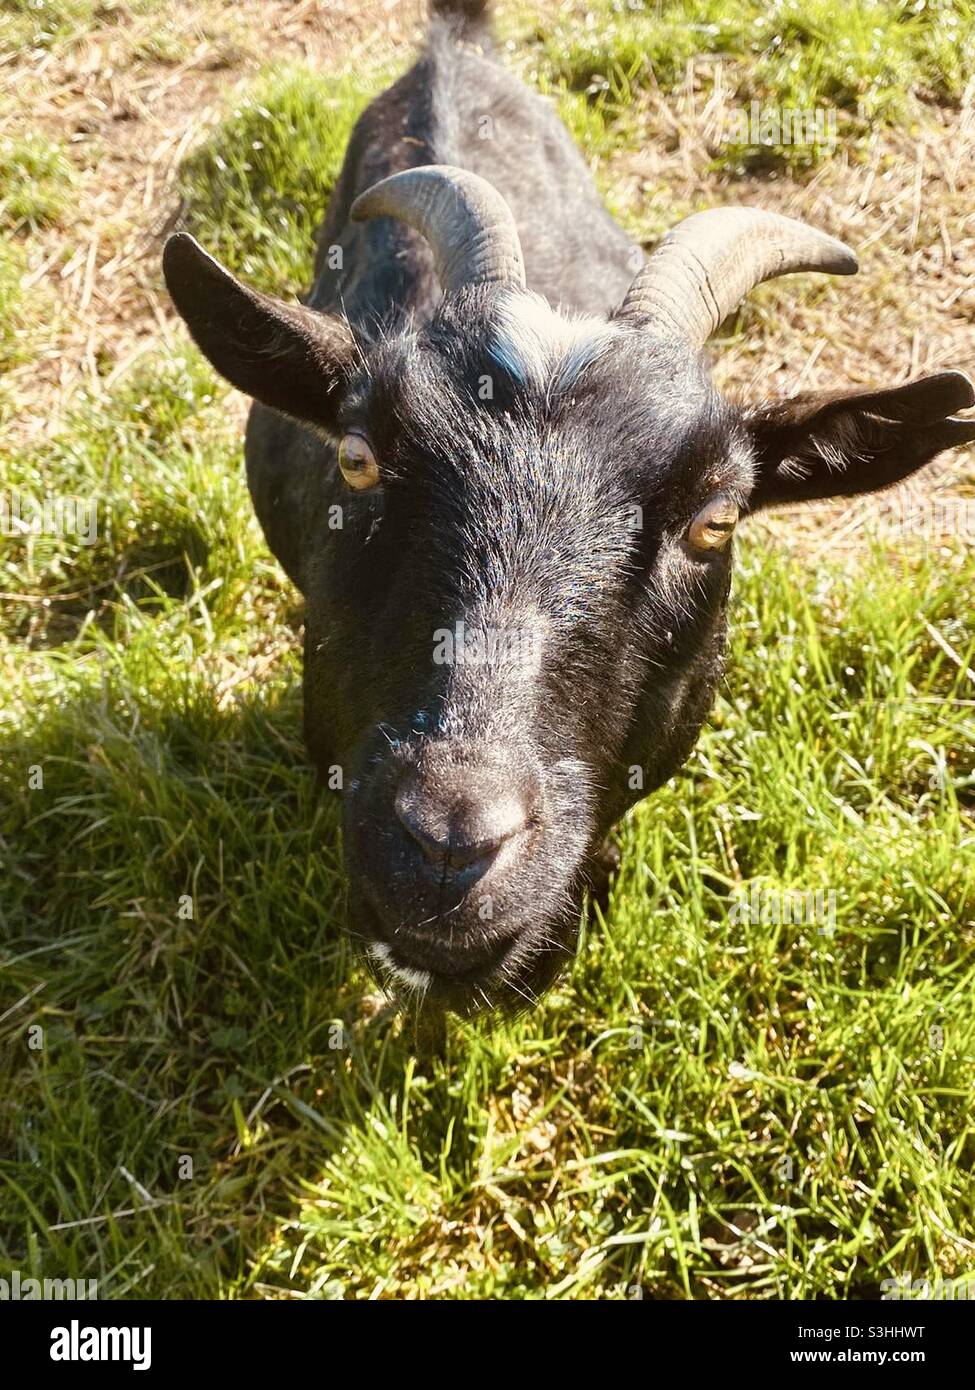 Goat and his rectangular pupils Stock Photo - Alamy